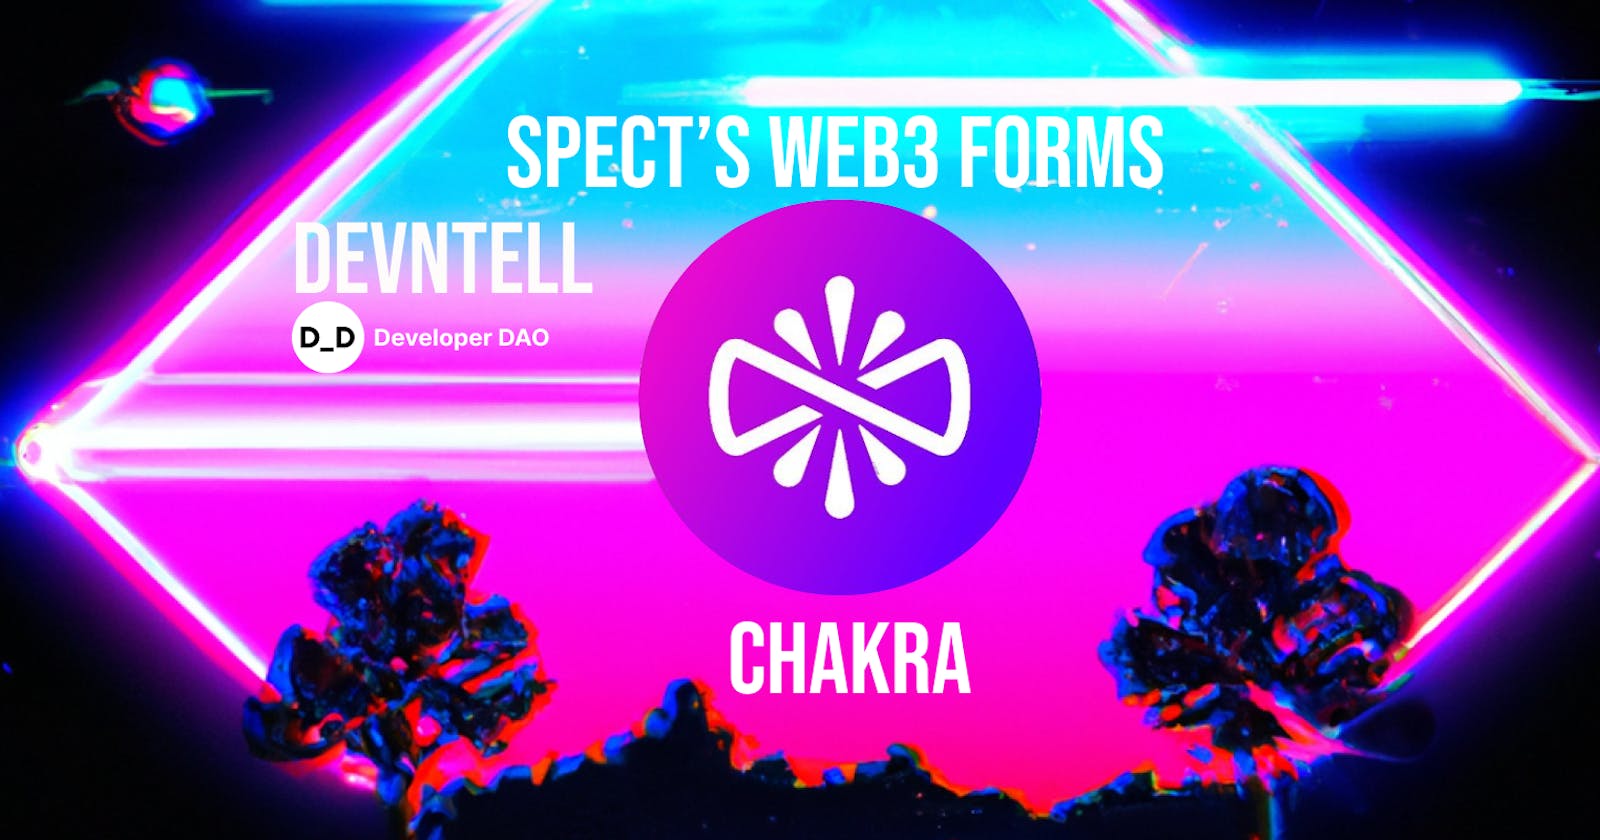 DevNTell - Spect's Web3 Forms